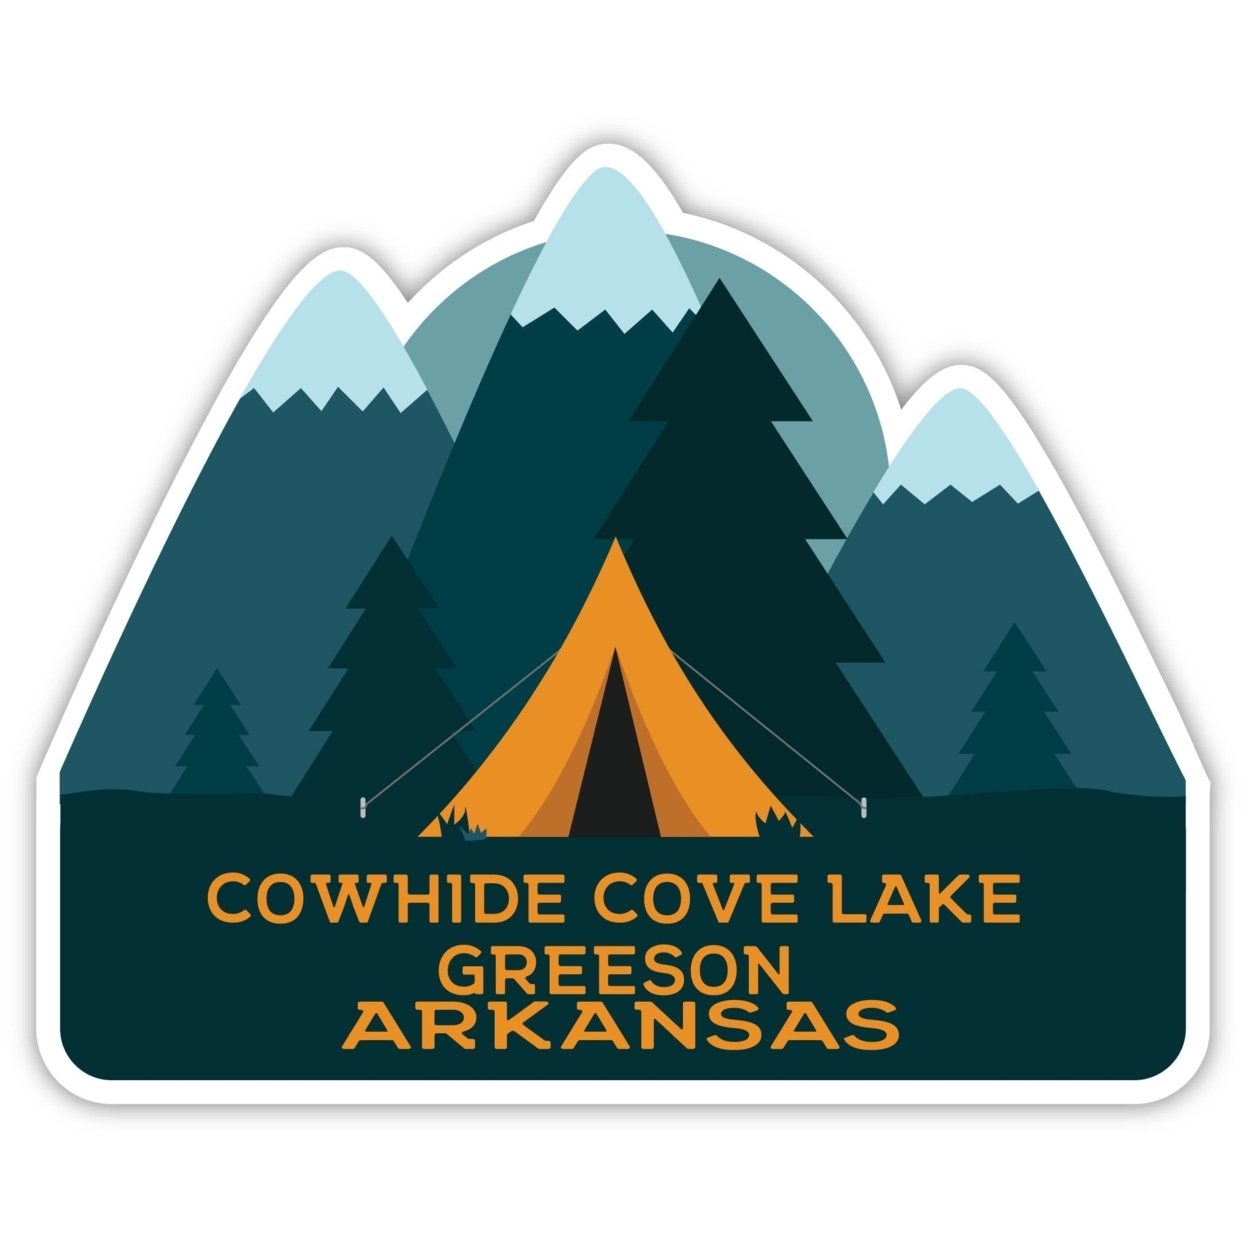 Cowhide Cove Lake Greeson Arkansas Souvenir Decorative Stickers (Choose Theme And Size) - Single Unit, 2-Inch, Tent